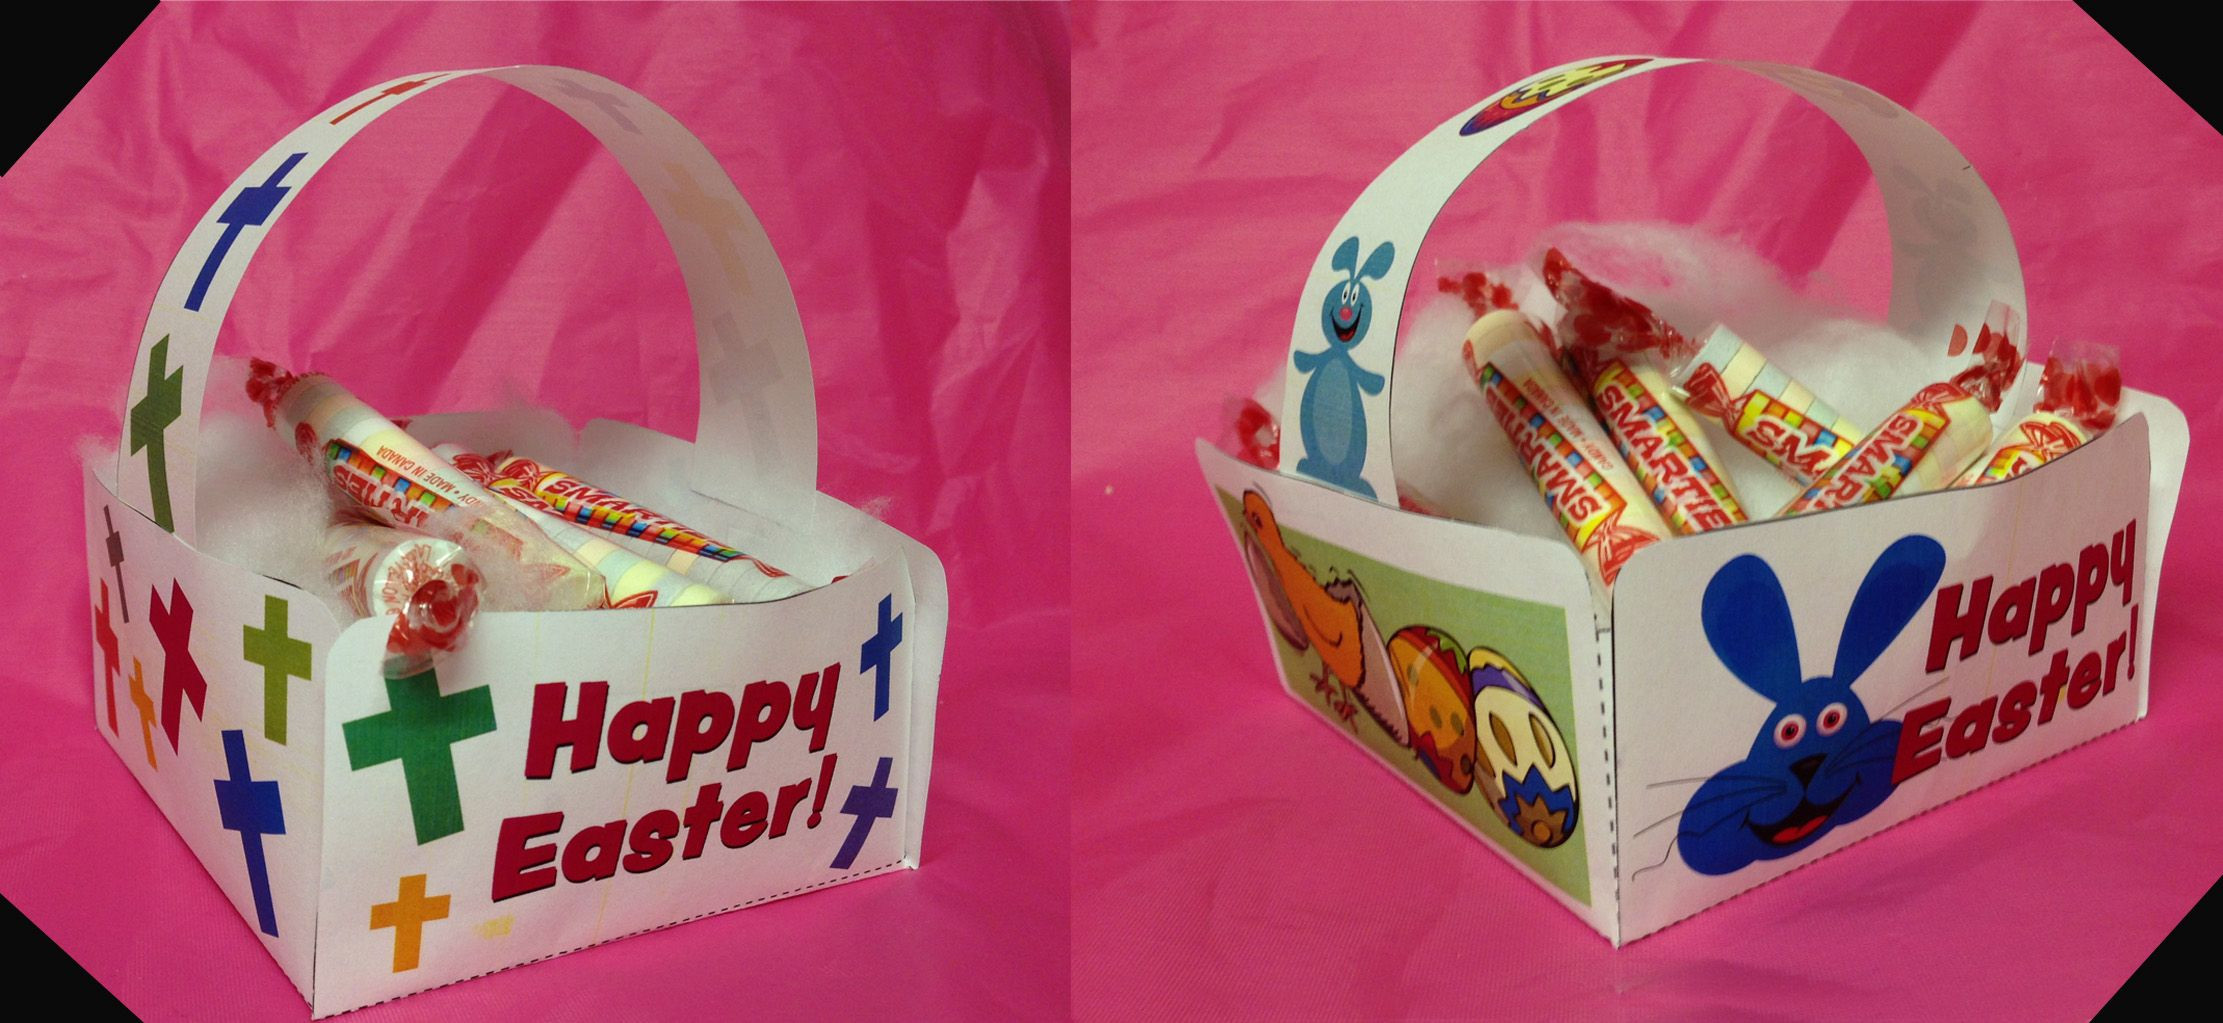 Easter Basket Craft Ideas For Preschoolers
 Free Printable Easter Baskets from Guildcraft Arts